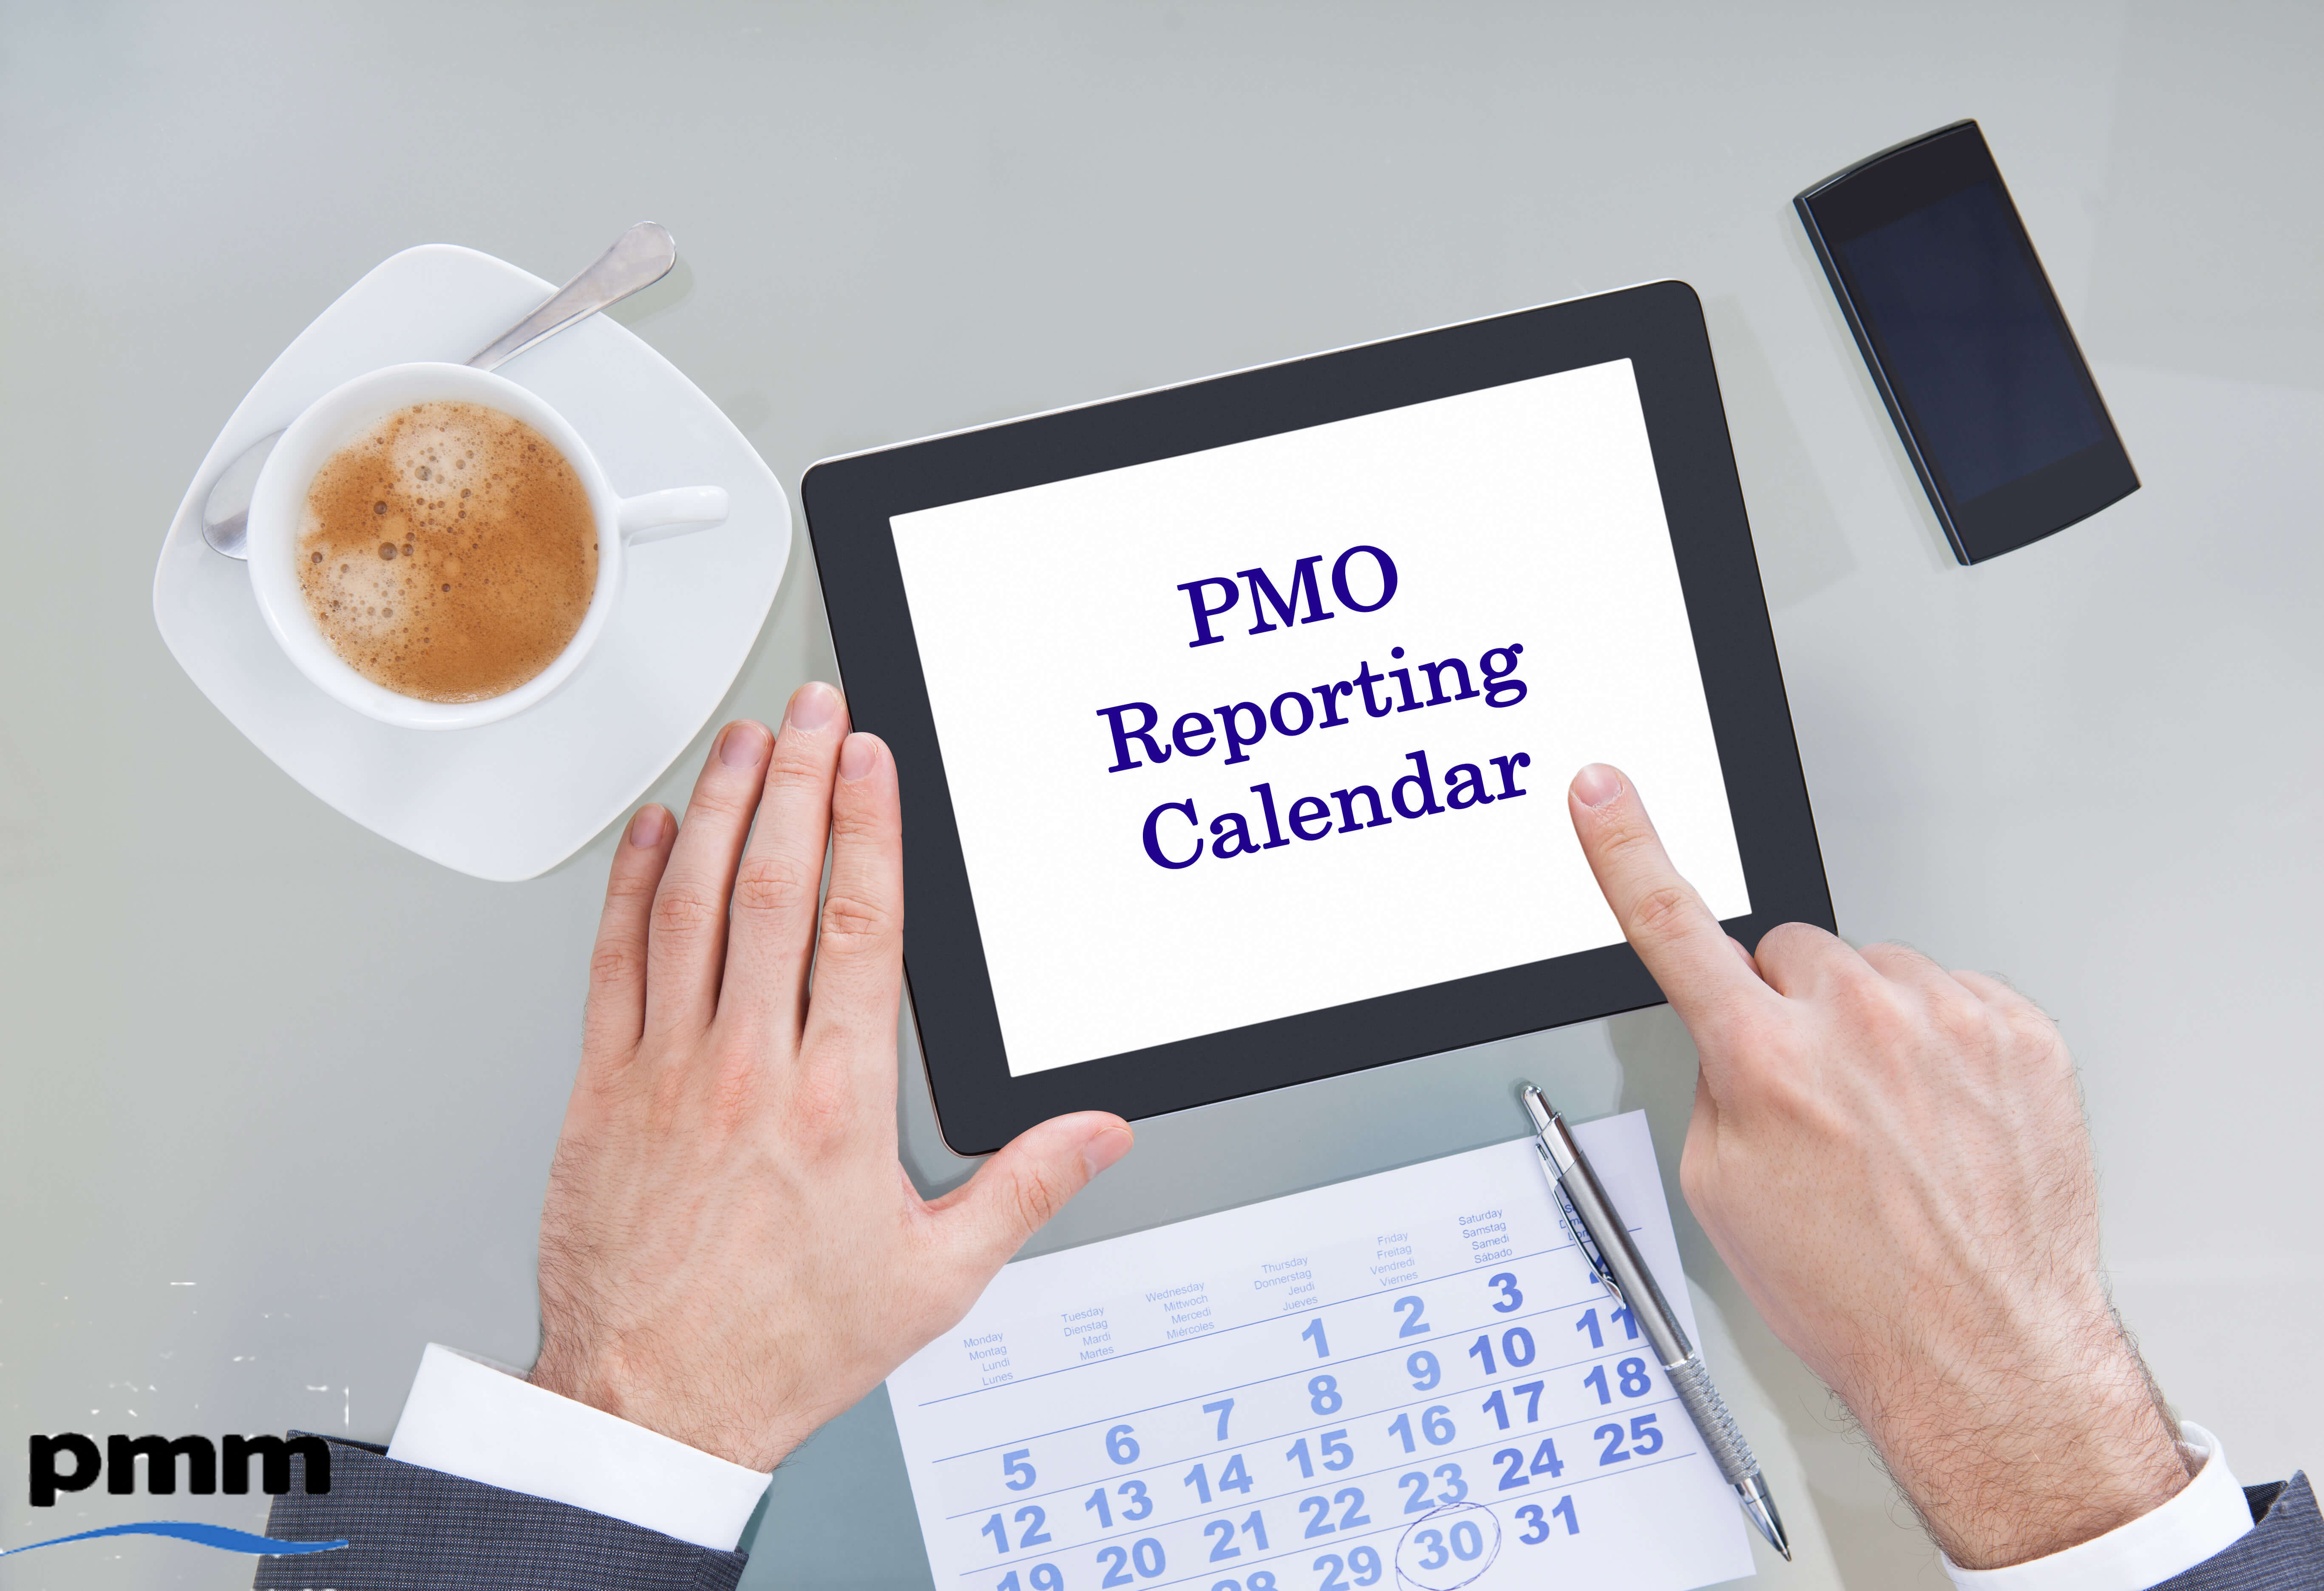 Building PMO reporting calendar